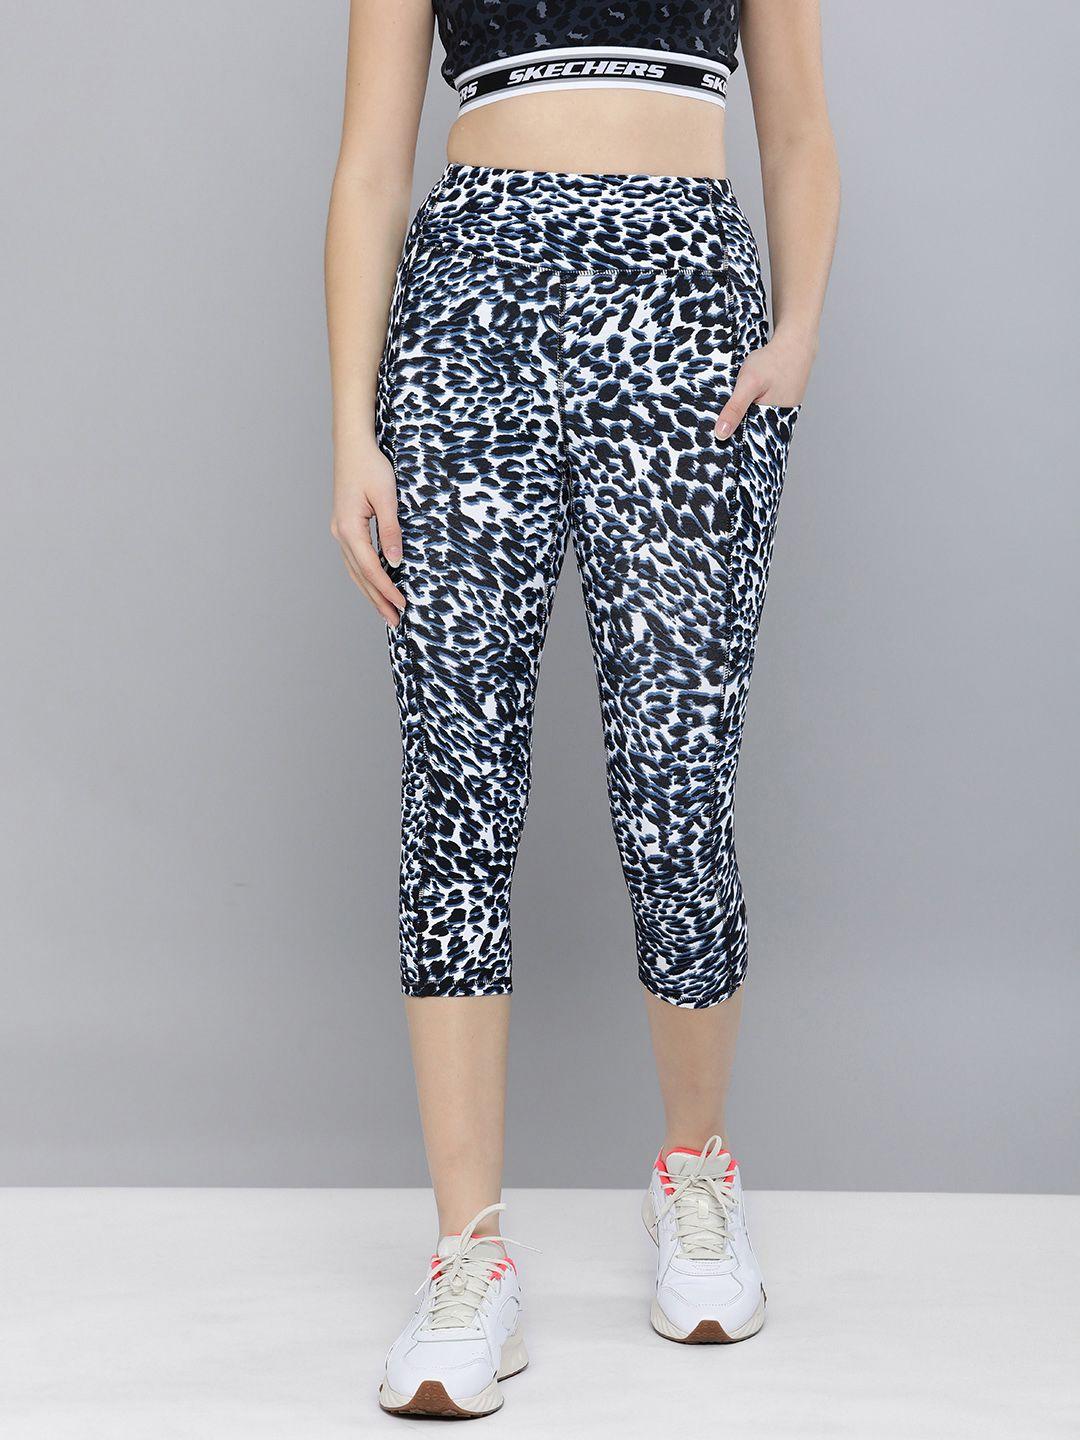 skechers-women-white-&-navy-blue-high-waist-leopard-midcalf-tights